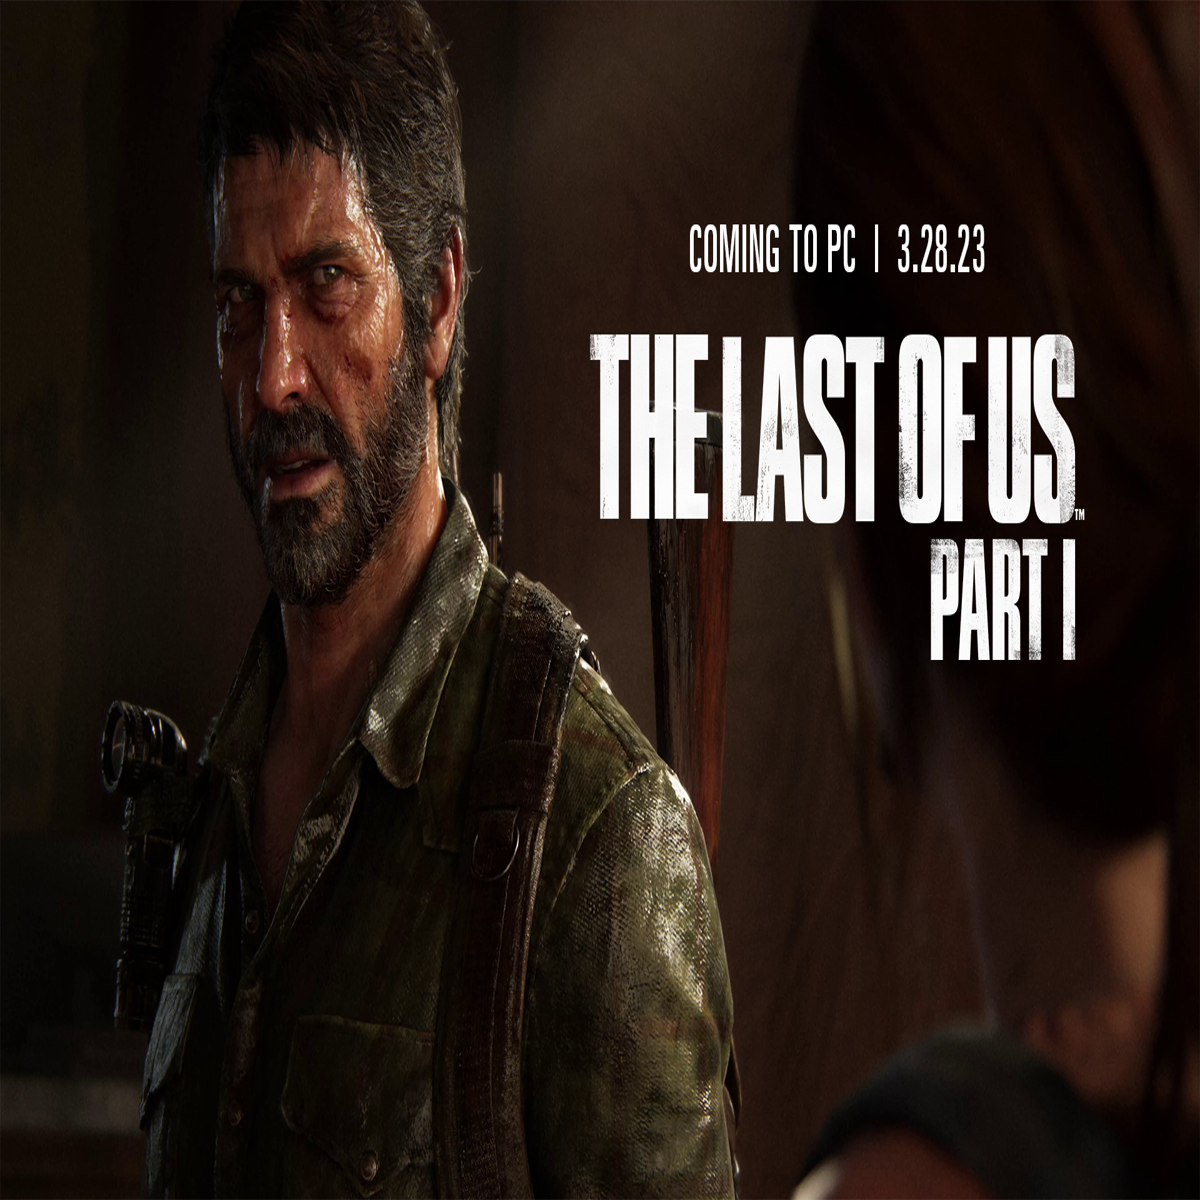 The Last of Us: Part 2 UltraWide 21:9 wallpapers or desktop